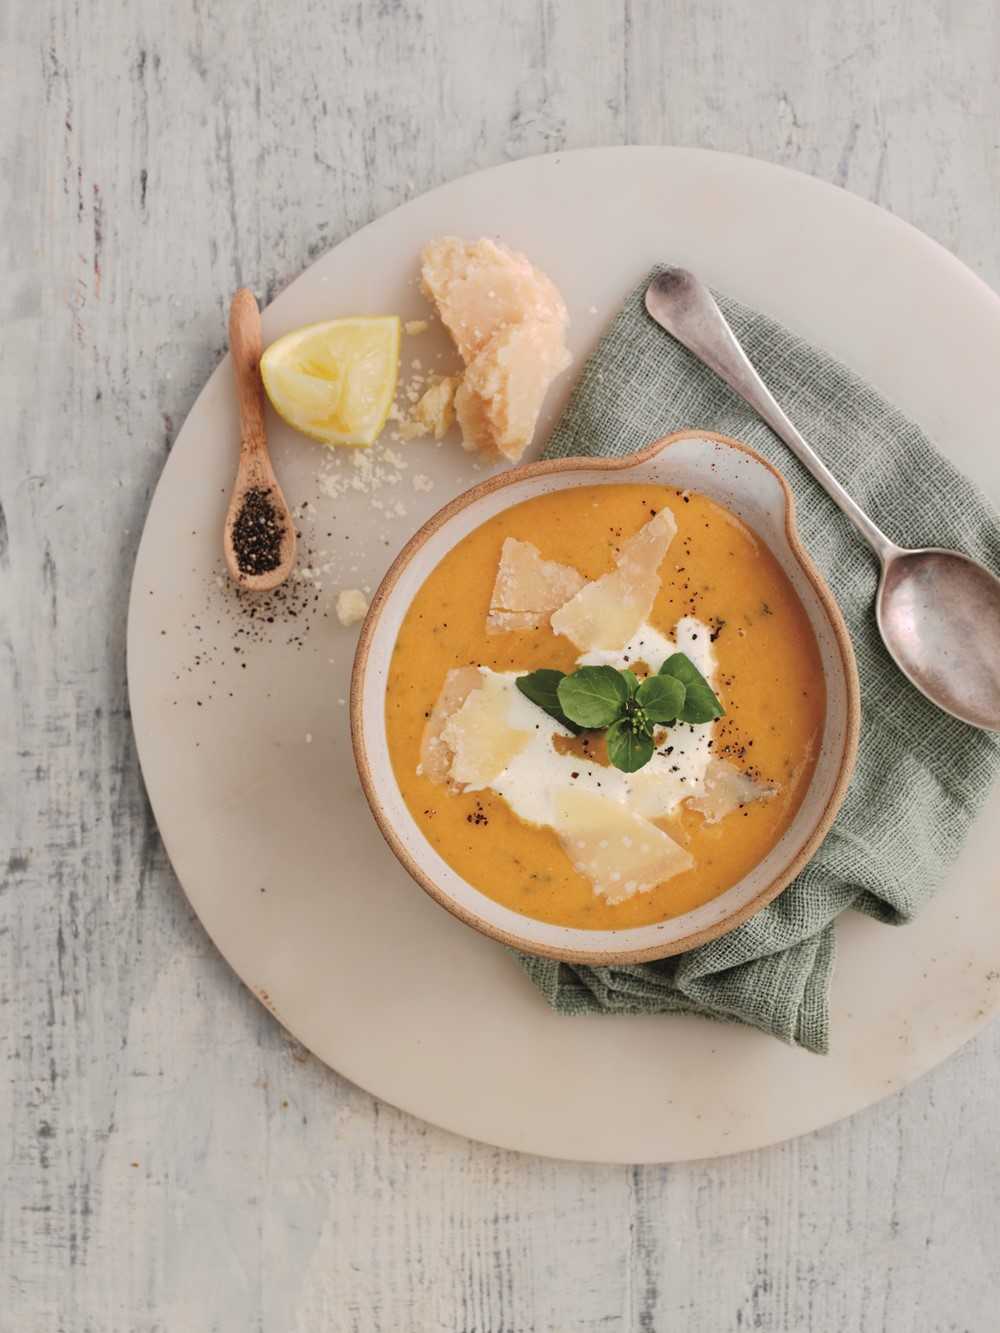 Bread & garlic soup with Parmigiano Reggiano and watercress